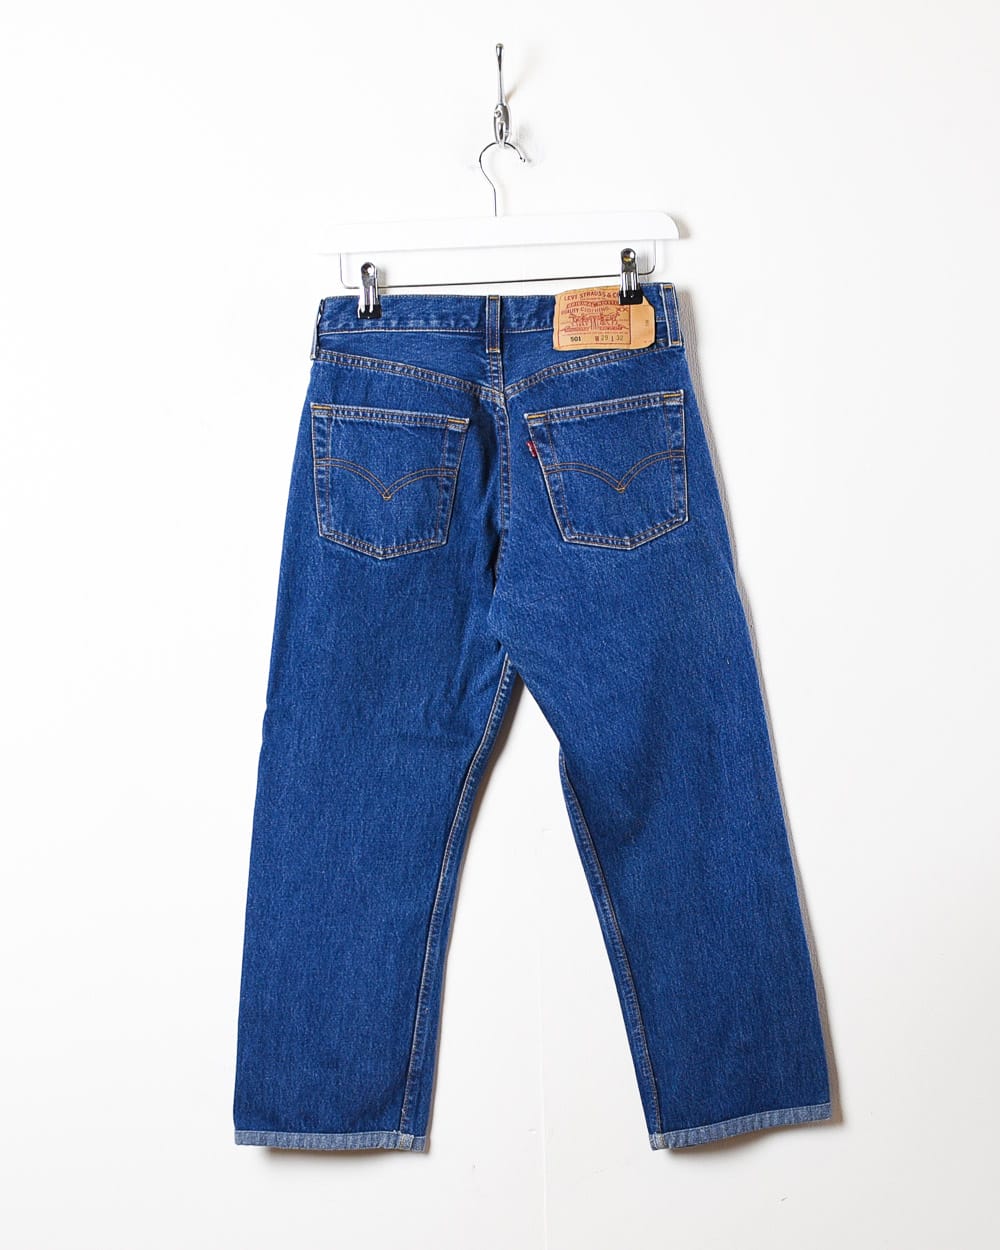 Navy Levi's 501 3/4 Length Jeans - W28 L23